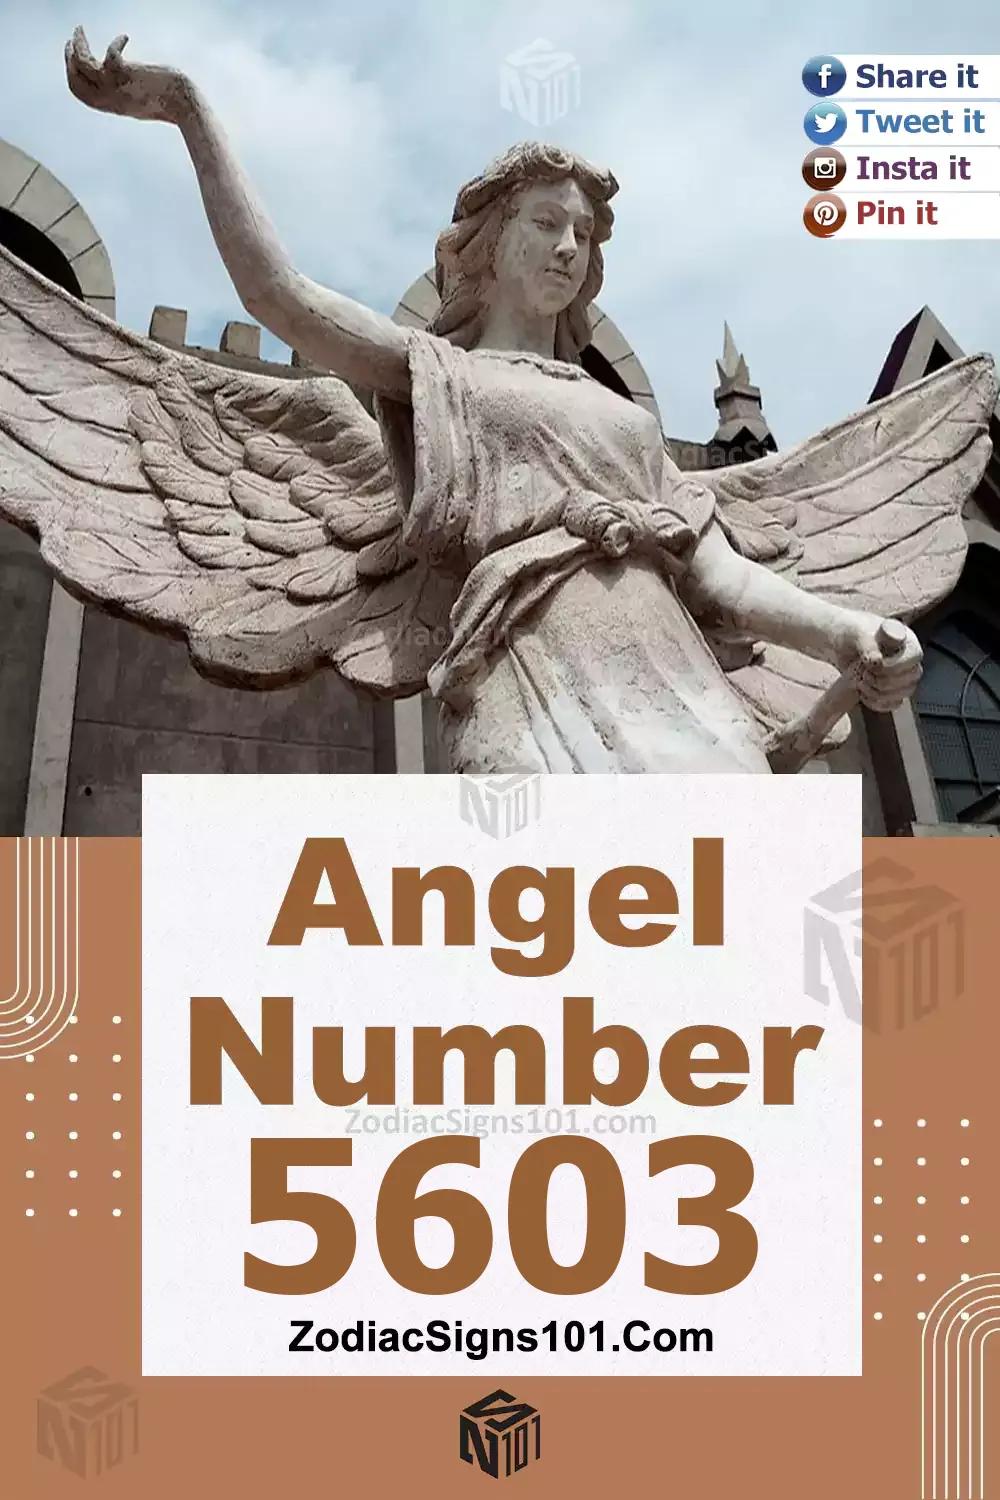 5603-Angel-Number-Meaning.jpg